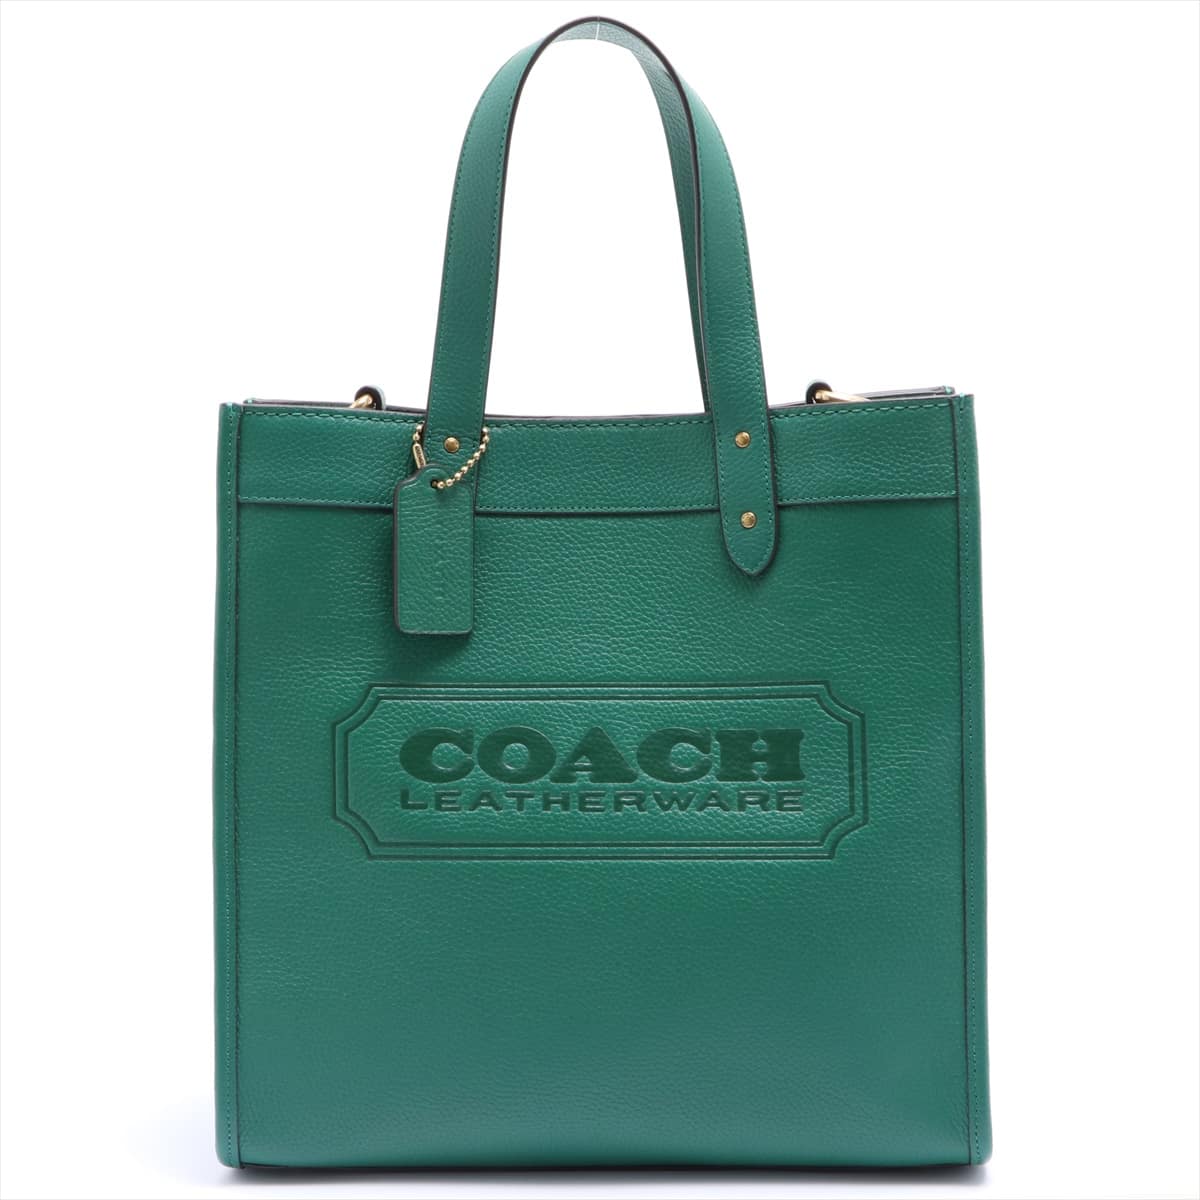 COACH Leather 2way shoulder bag Green C2781